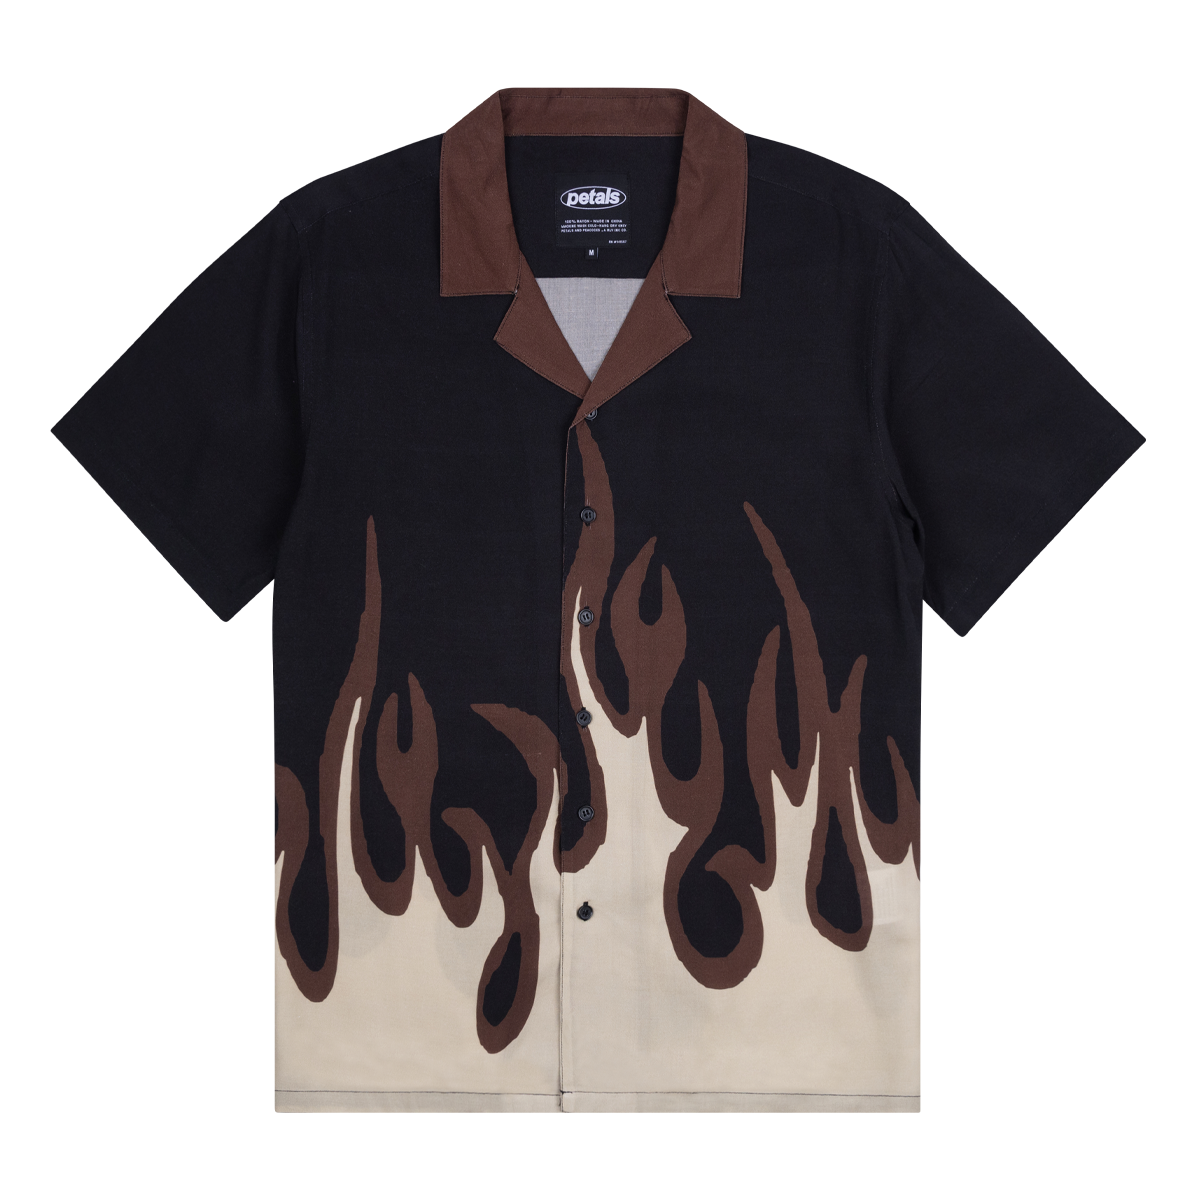  Flame Button Up Shirt